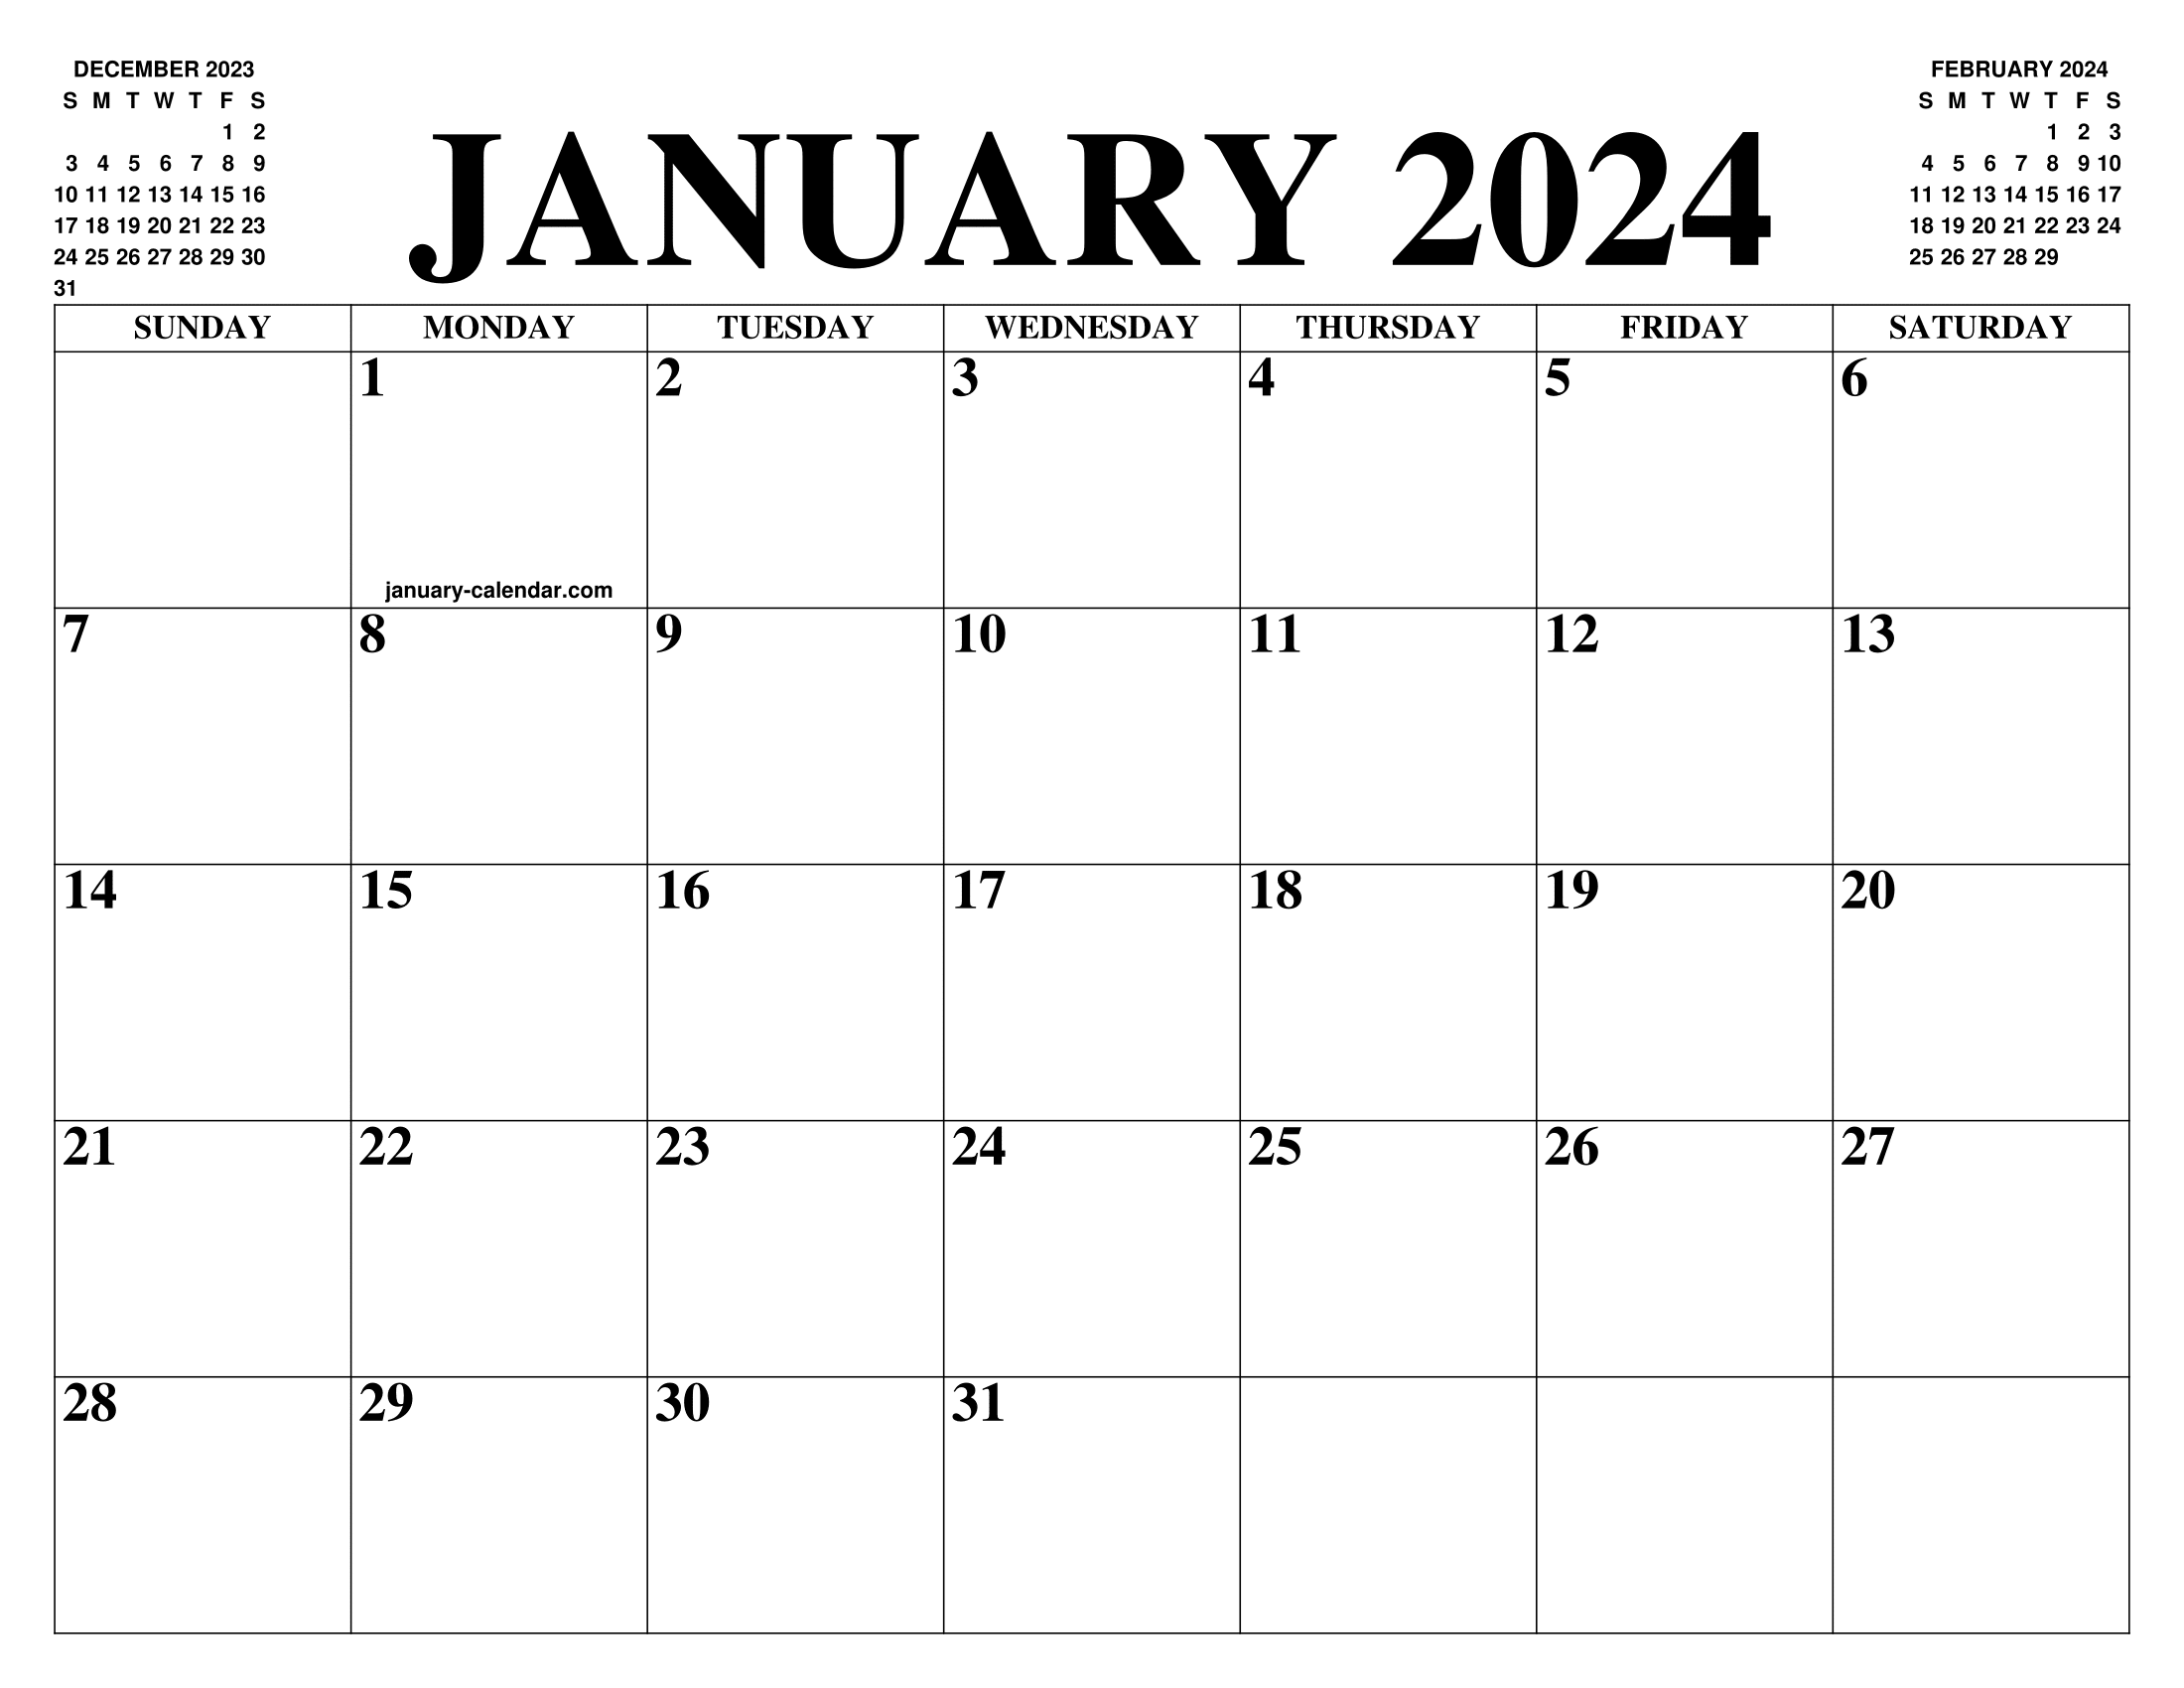 JANUARY 2024 CALENDAR OF THE MONTH FREE PRINTABLE JANUARY CALENDAR OF